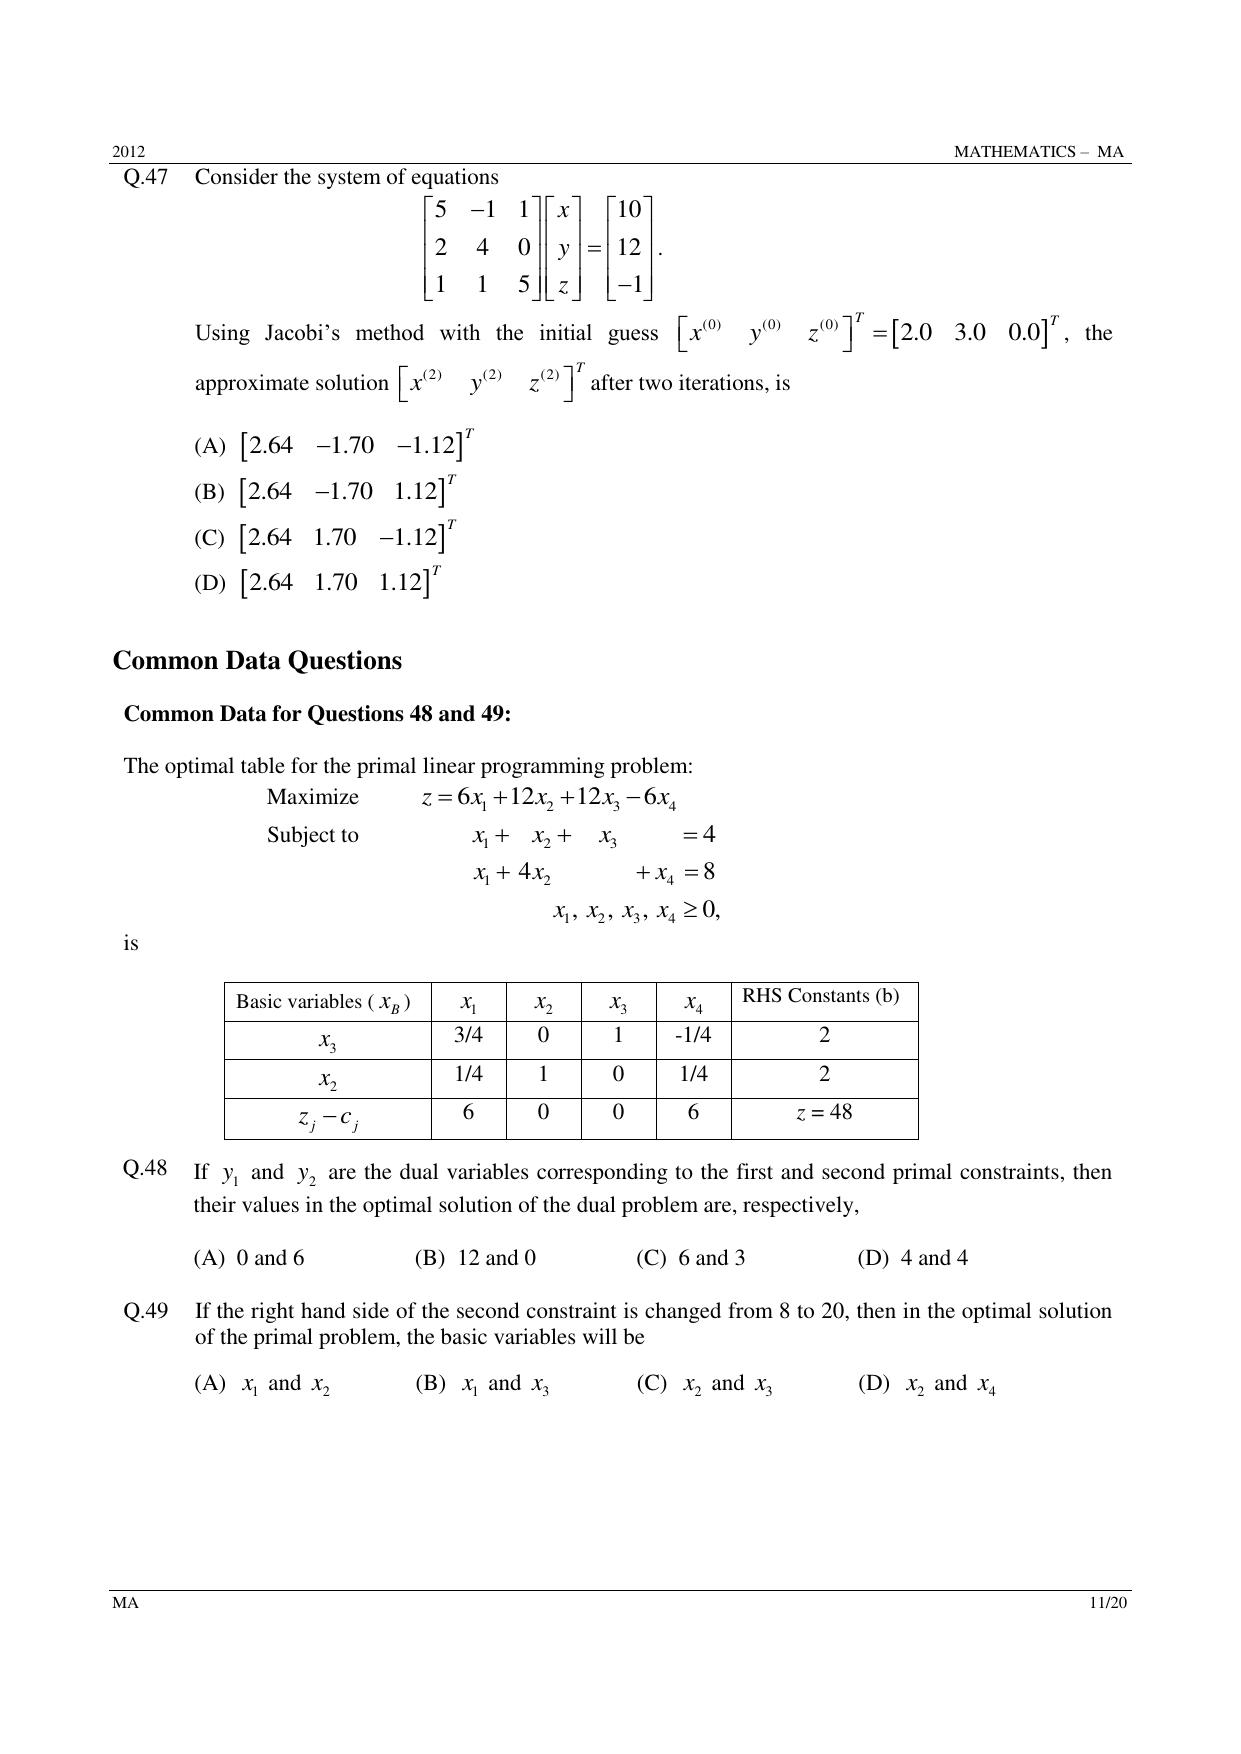 GATE 2012 Mathematics (MA) Question Paper with Answer Key - Page 11